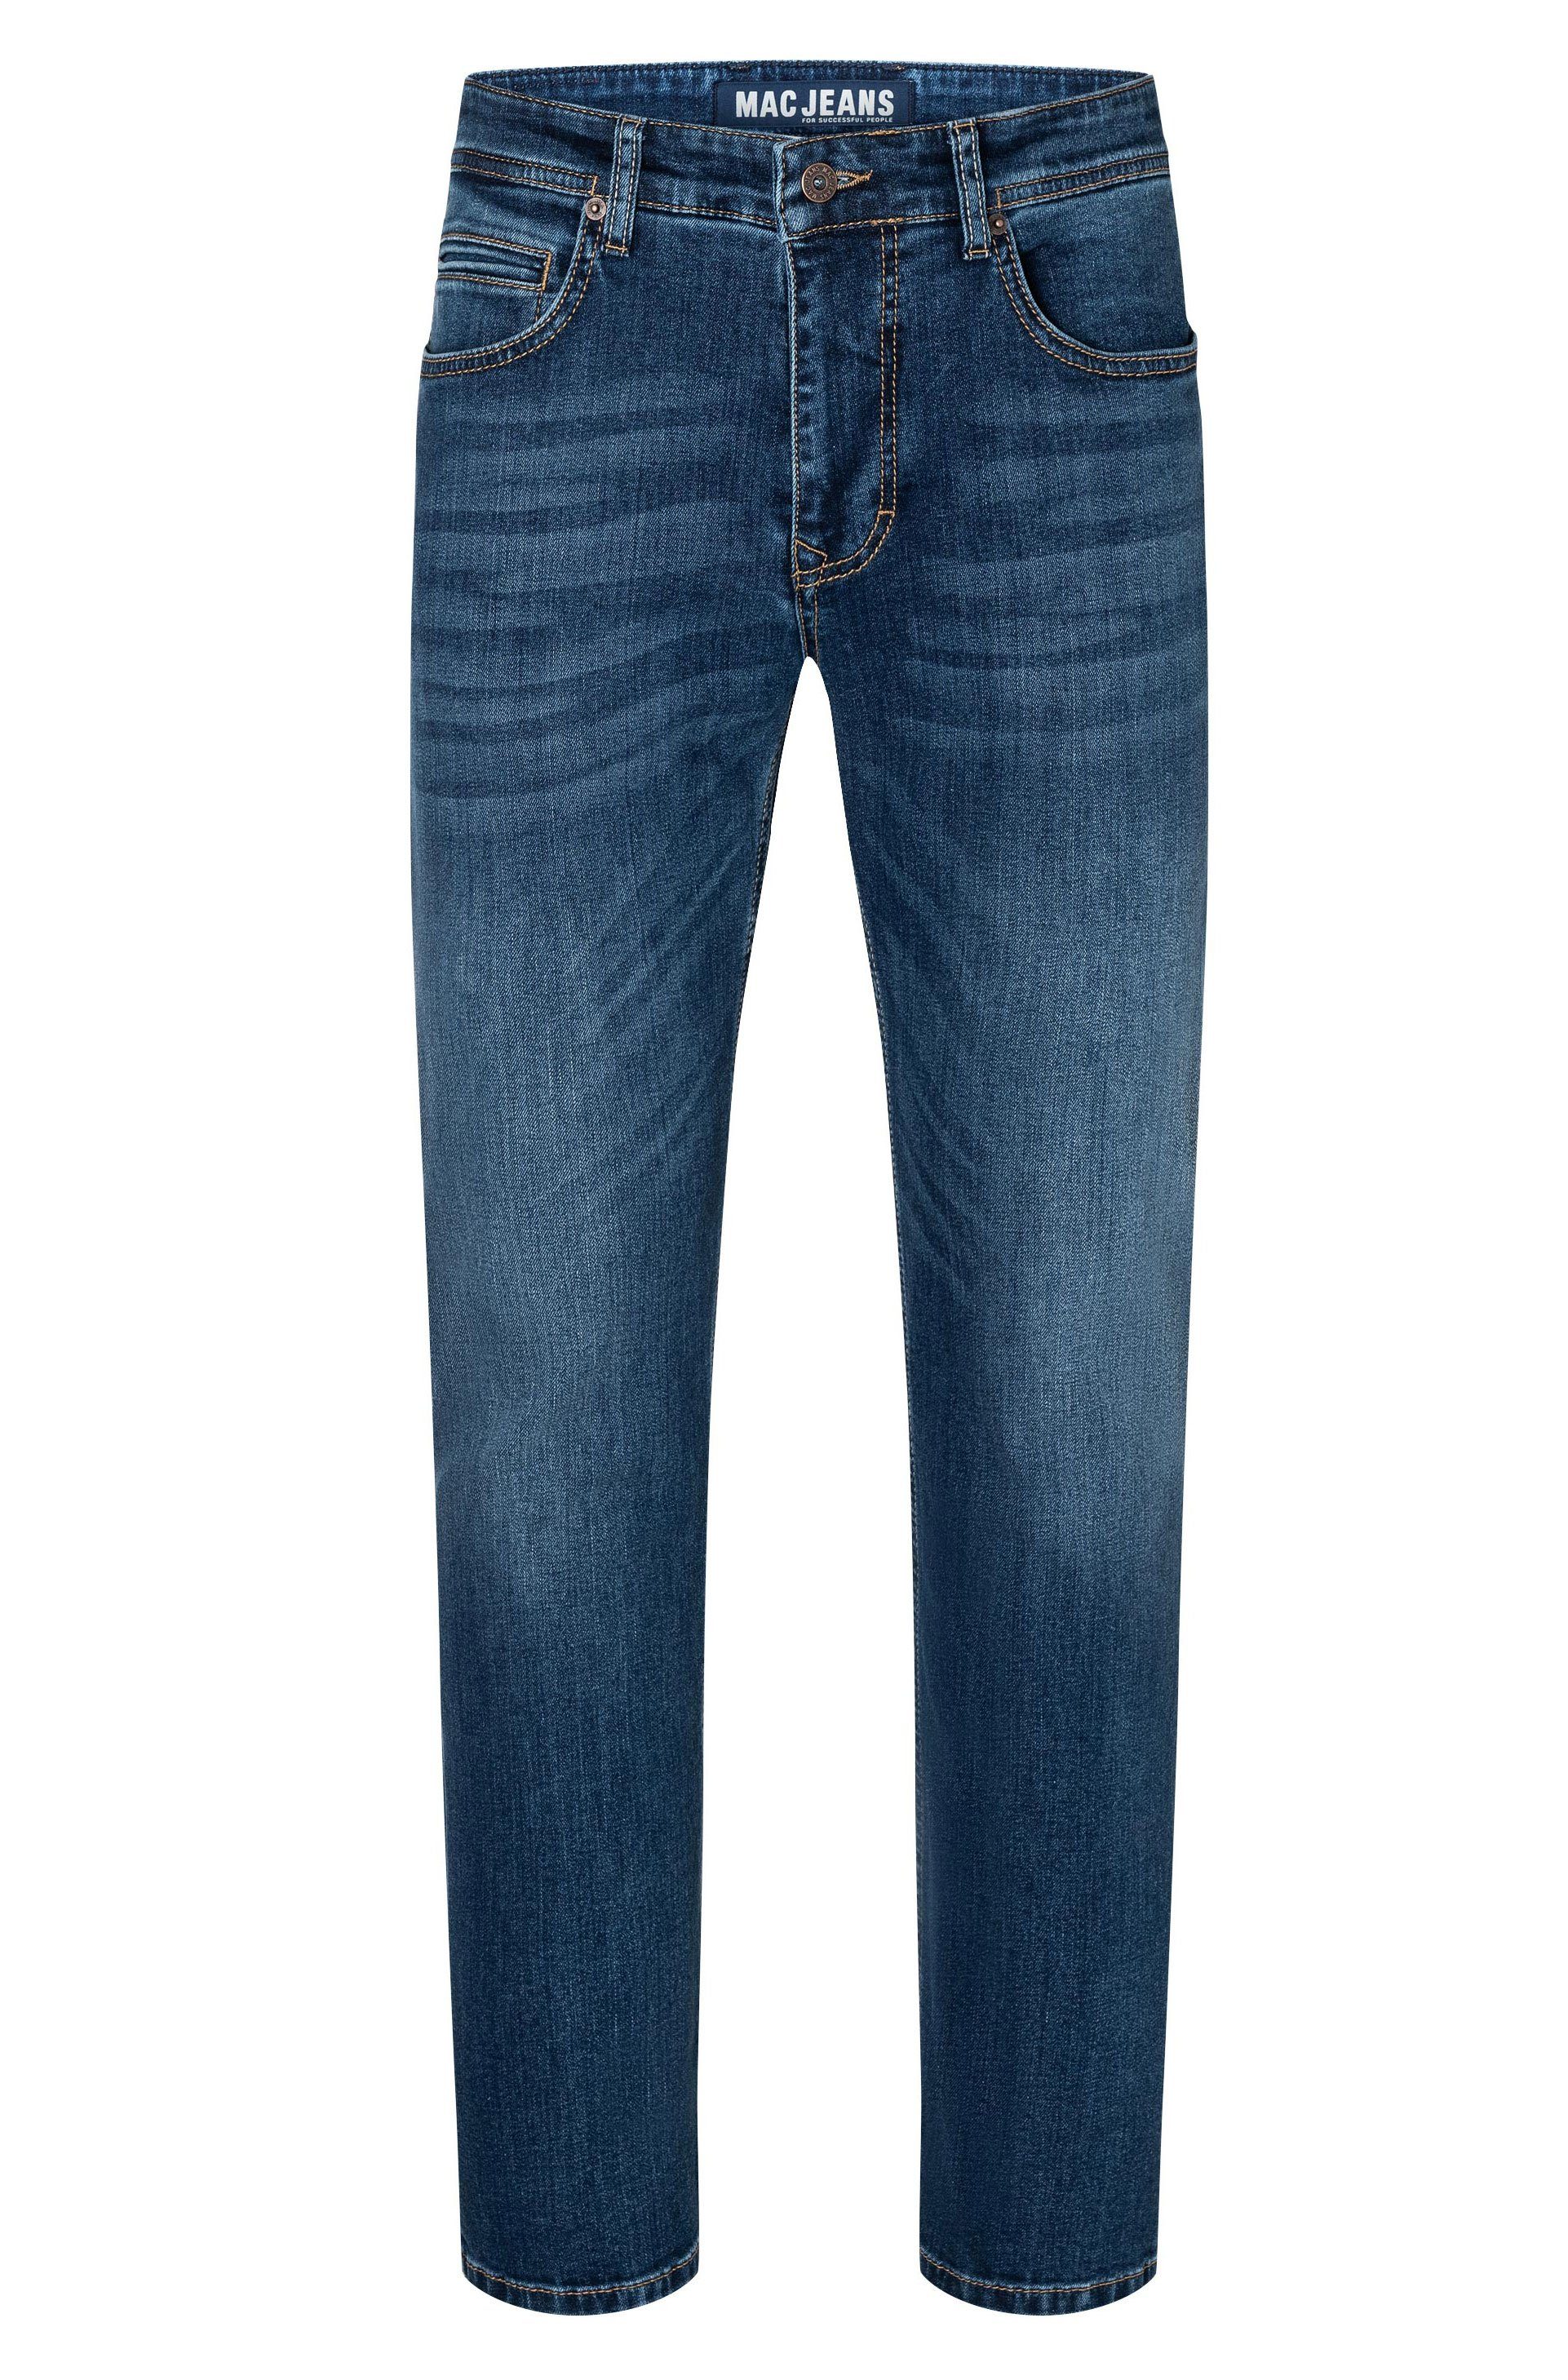 MAC 5-Pocket-Jeans Arne navy Denim blue Stretch authentic wash